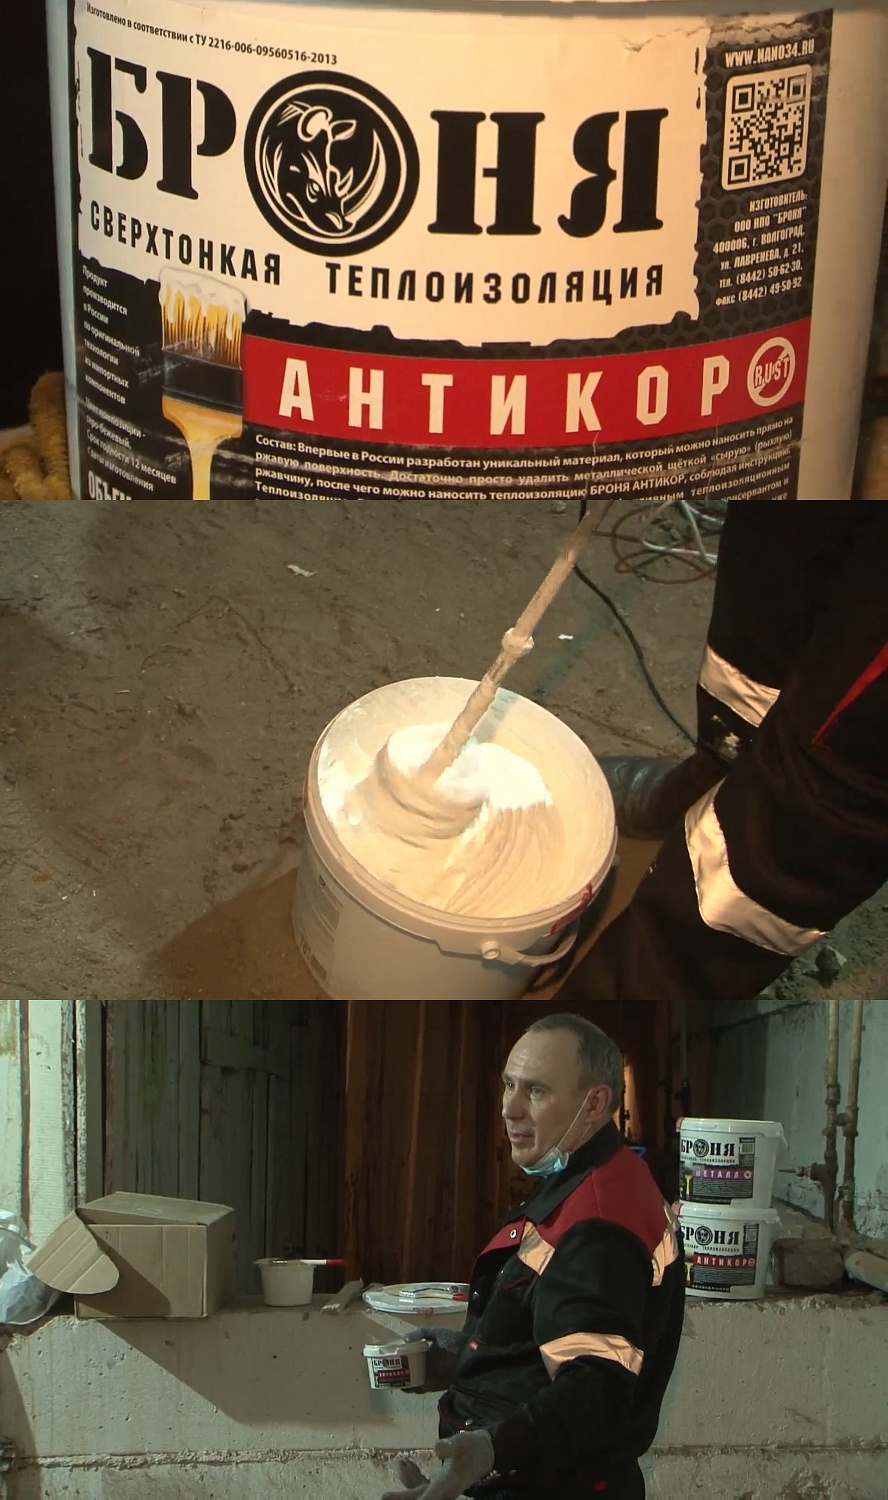 Important! TV report "Thermal insulation Bronya Antikor in ZhKK in Belogorsk, Amur Region" (photo preview + video footage)